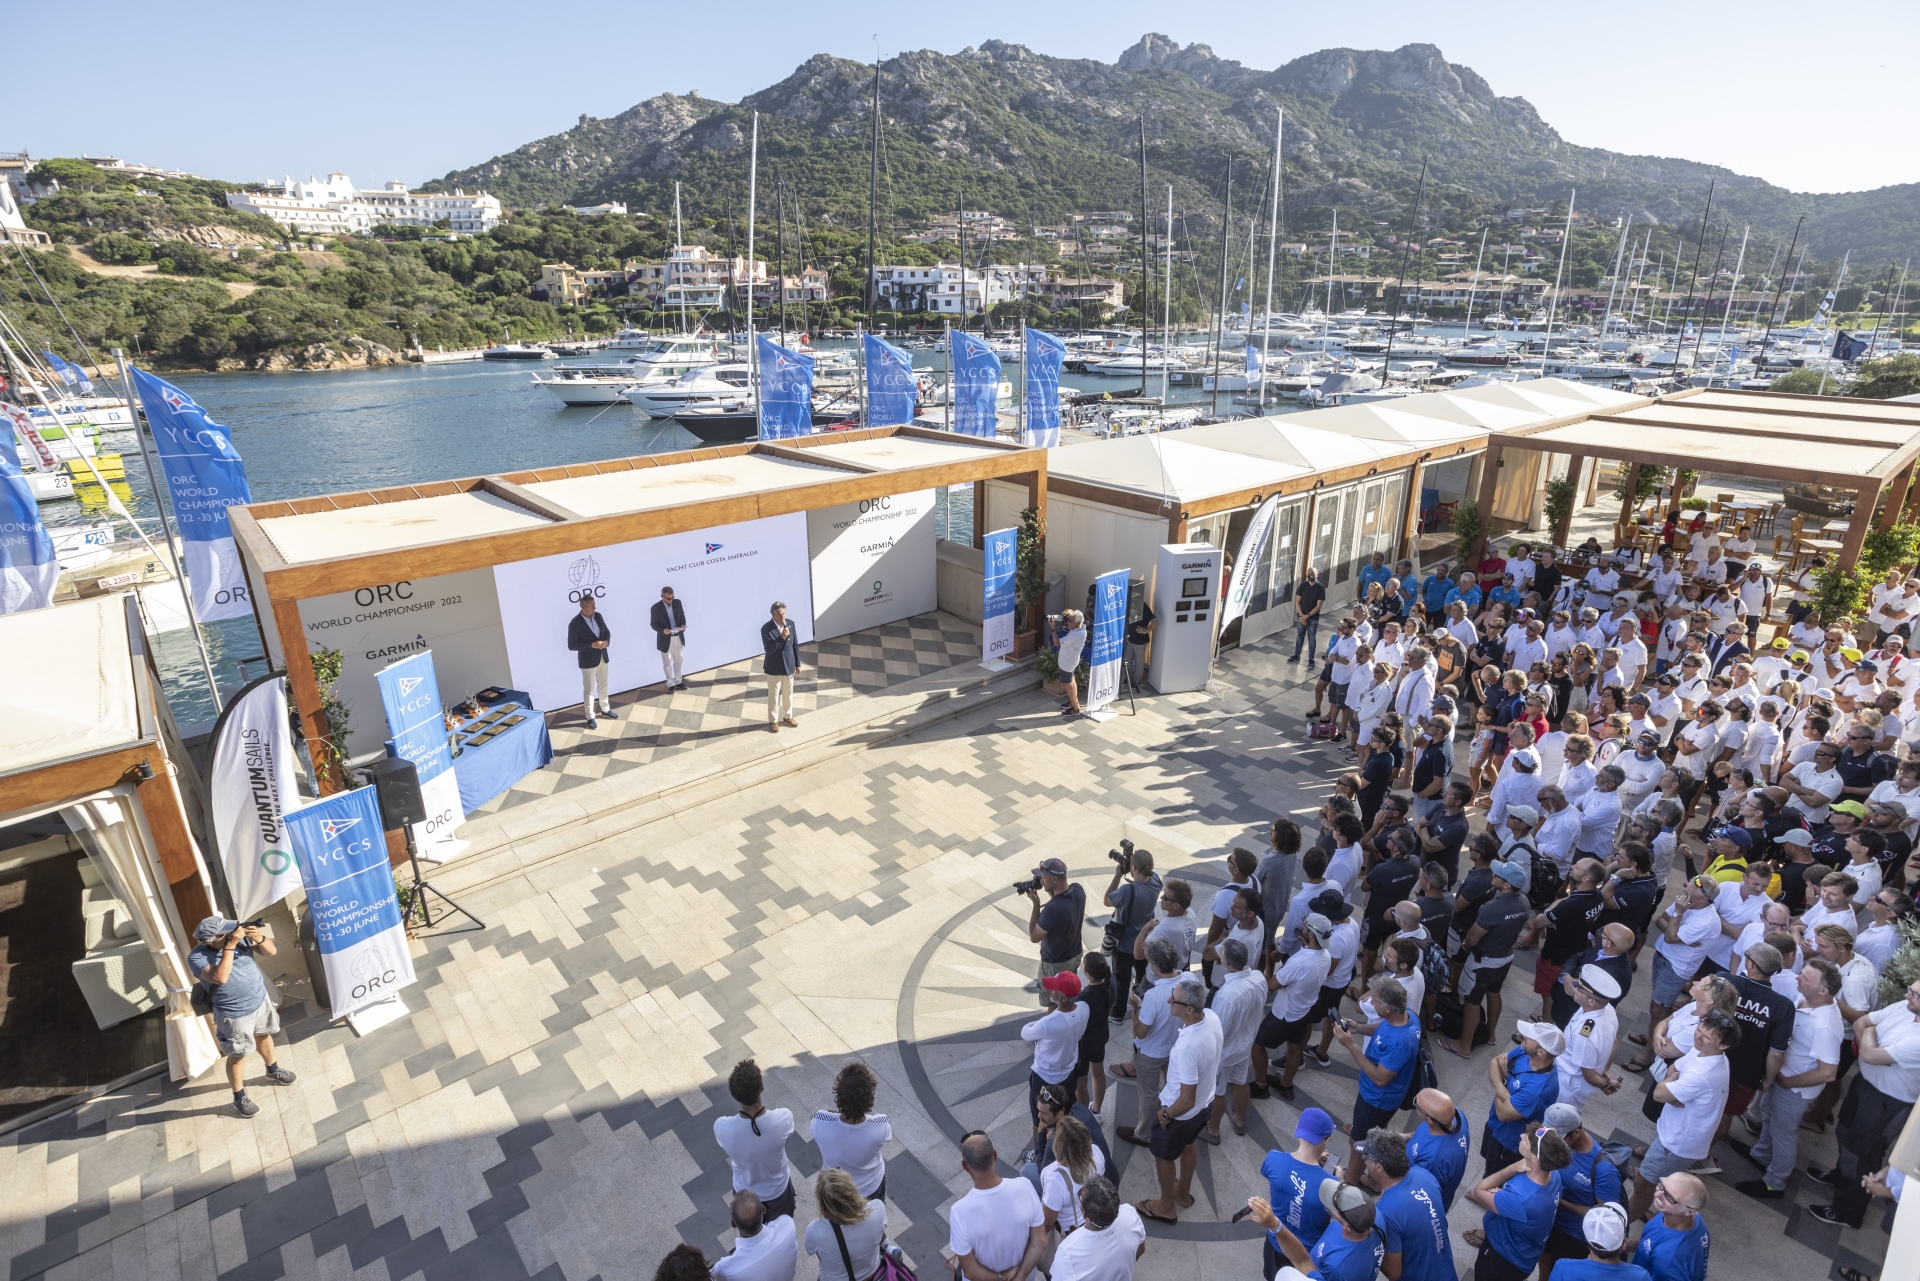 ORC World Championship wraps up successfully in Porto Cervo - News - Yacht Club Costa Smeralda